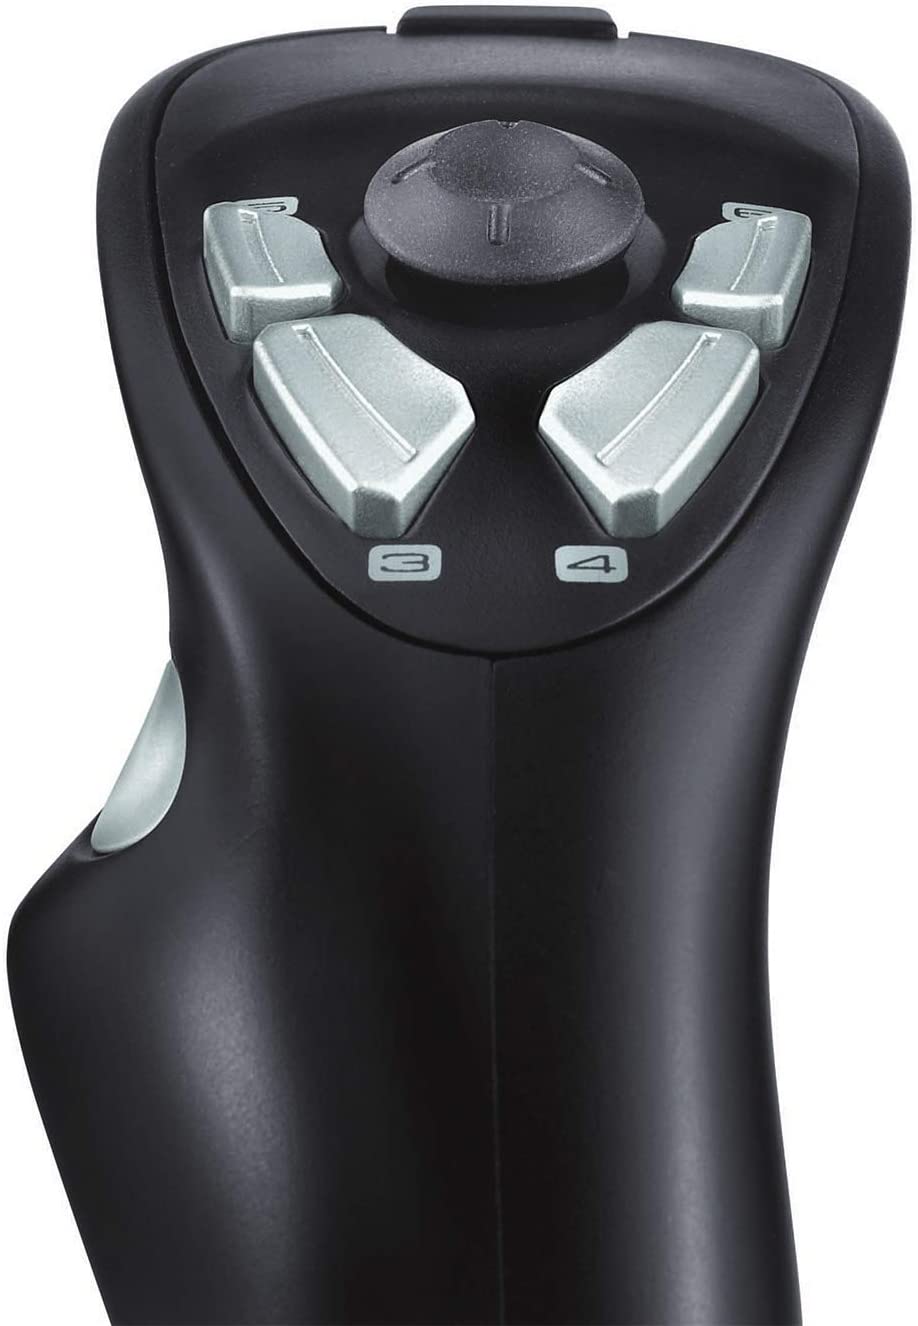 Logitech G Extreme 3D Pro Joystick with 12 Programmable Buttons Suitable for Flight Simulators, FPS Games Compatible with Windows